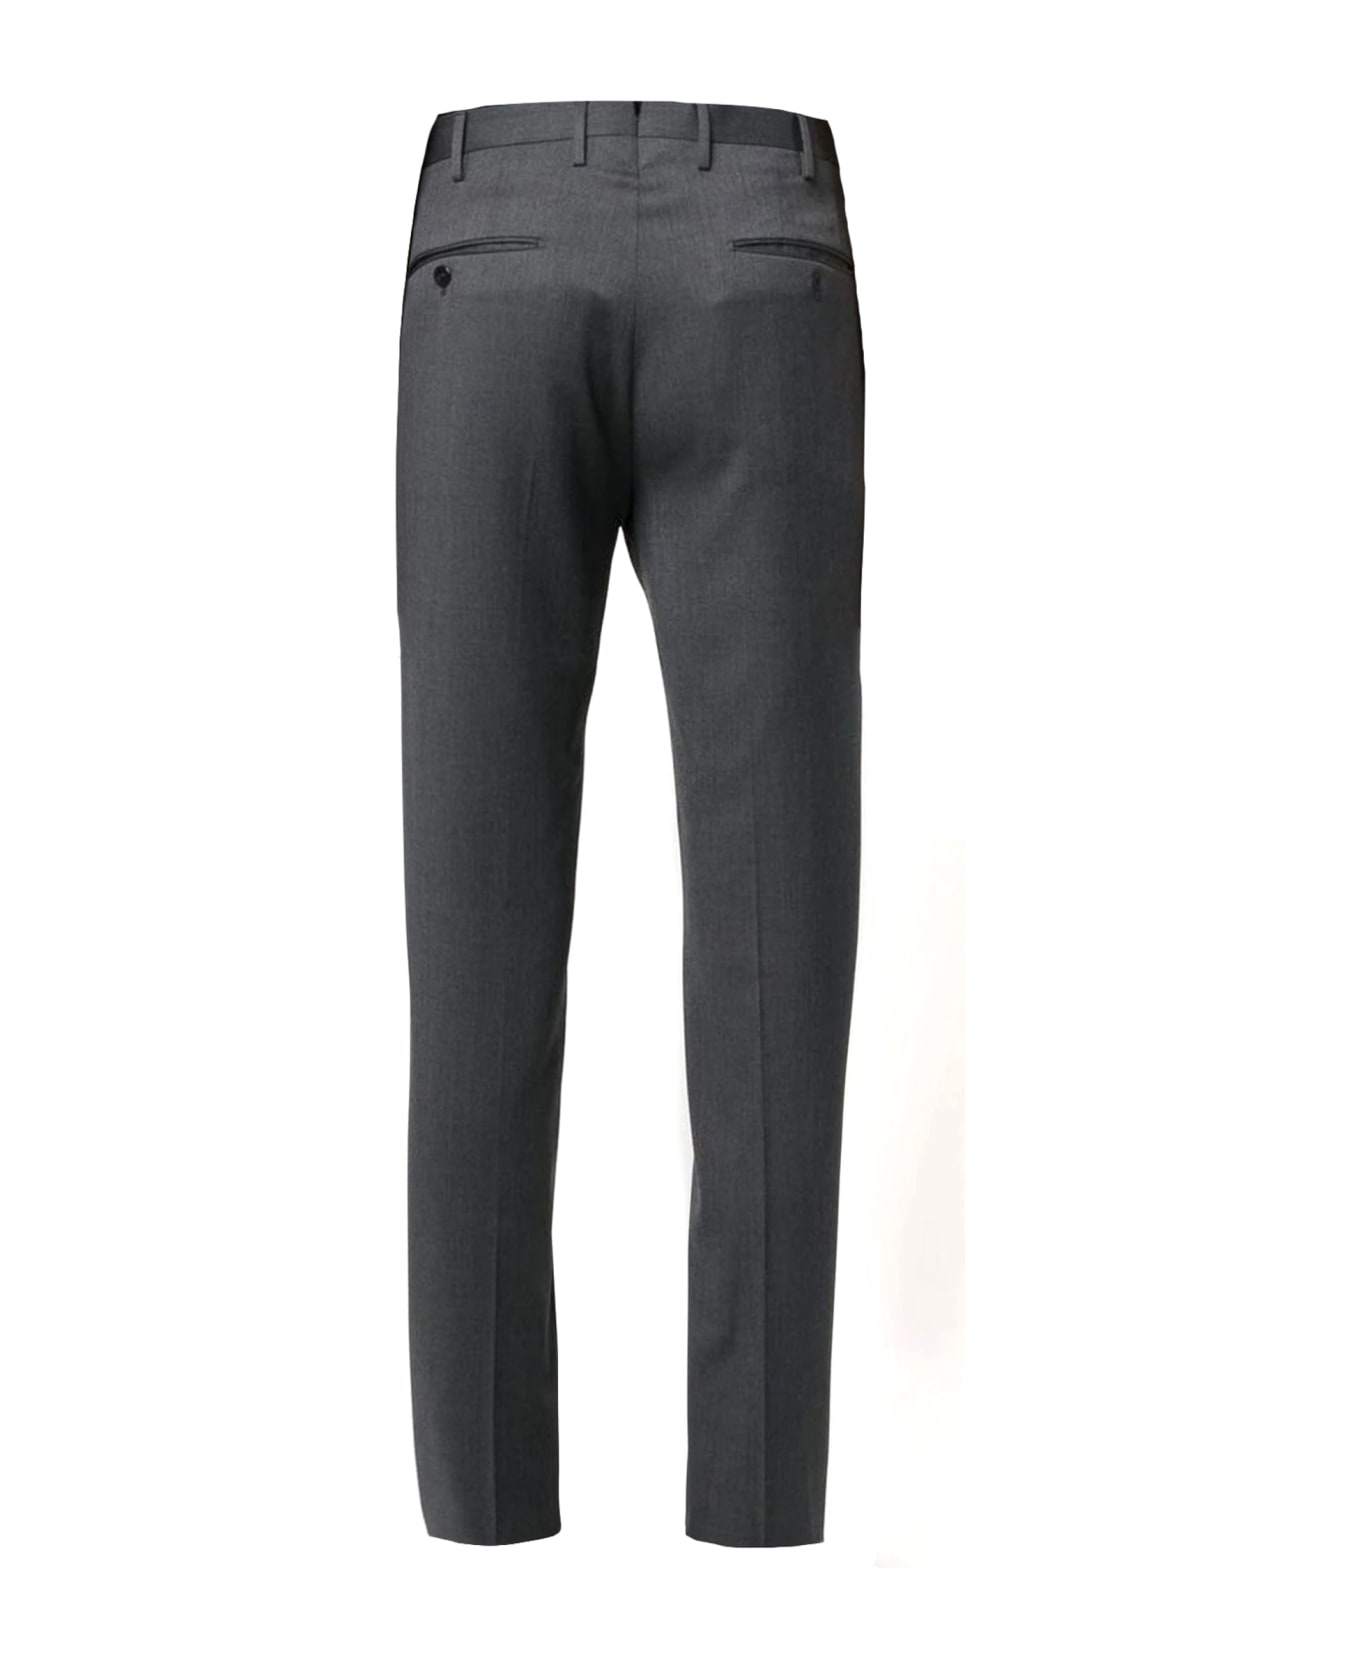 Incotex Charcoal Grey Virgin Wool Trousers